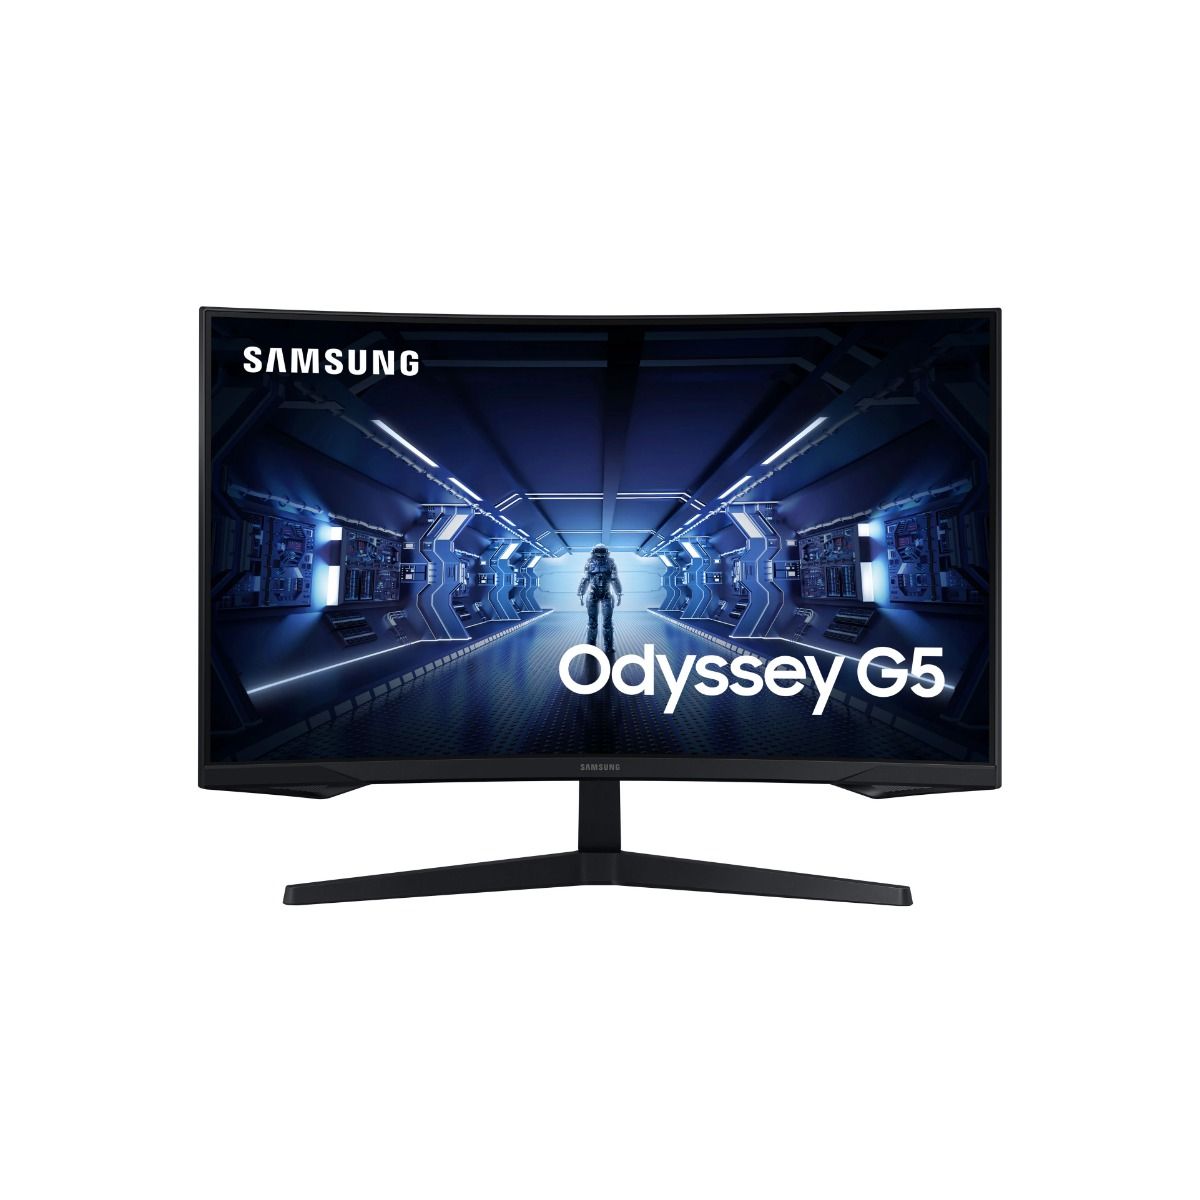 Samsung Odyssey G5 27" Quad HD Curved Gaming Monitor 144Hz 1ms